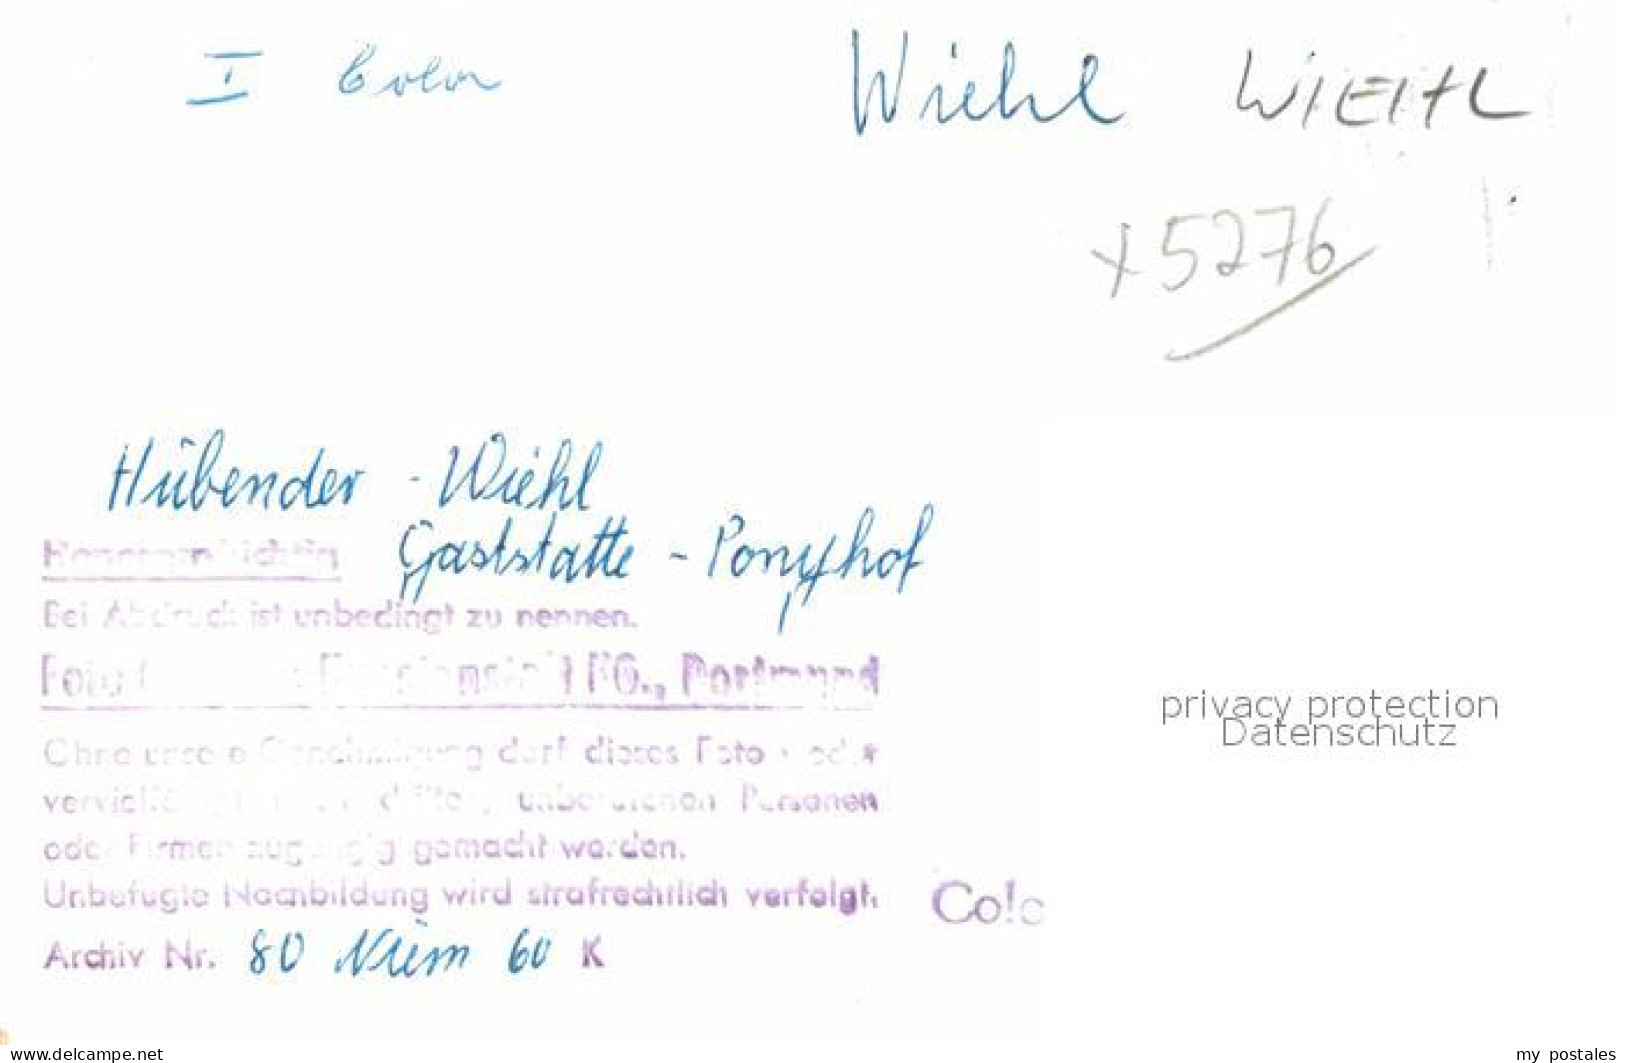 42760043 Huebender Gaststaette Ponyhof Wiehl - Wiehl